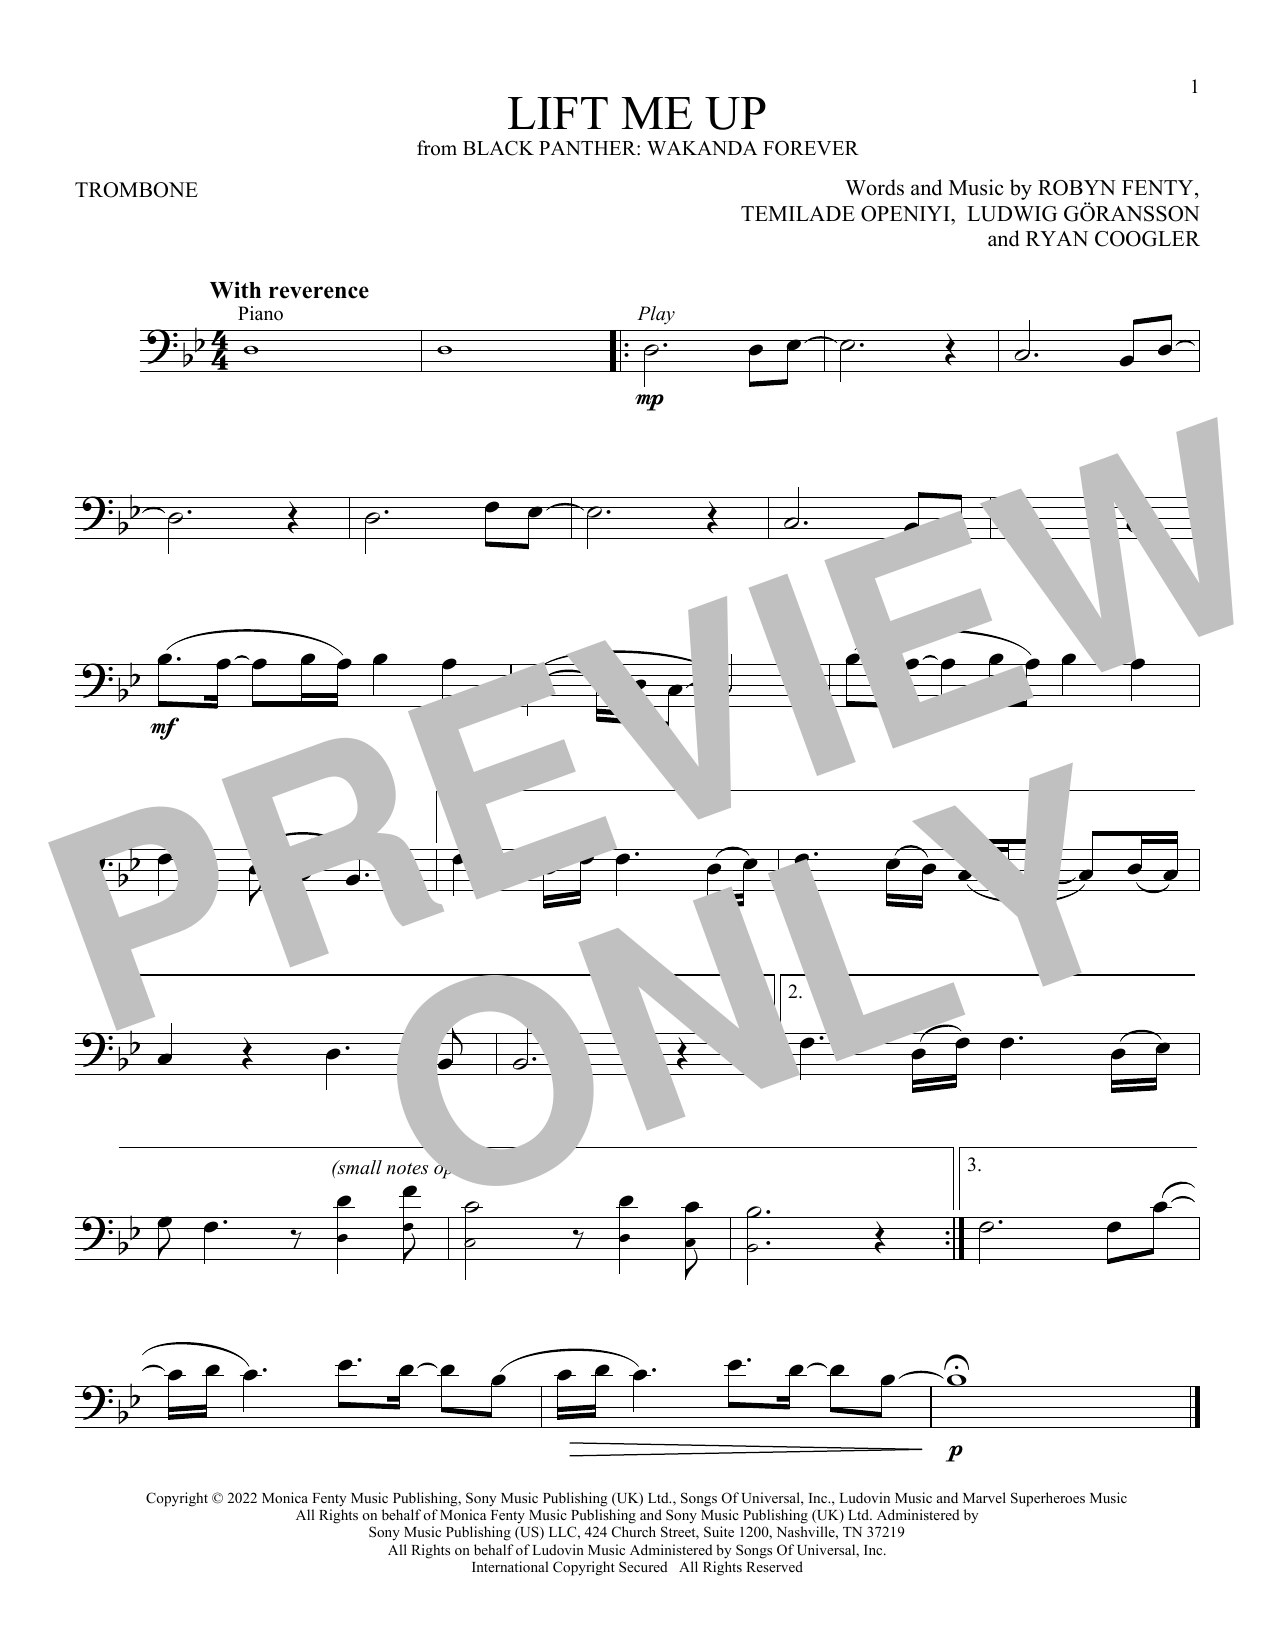 Rihanna Lift Me Up (from Black Panther: Wakanda Forever) sheet music notes printable PDF score